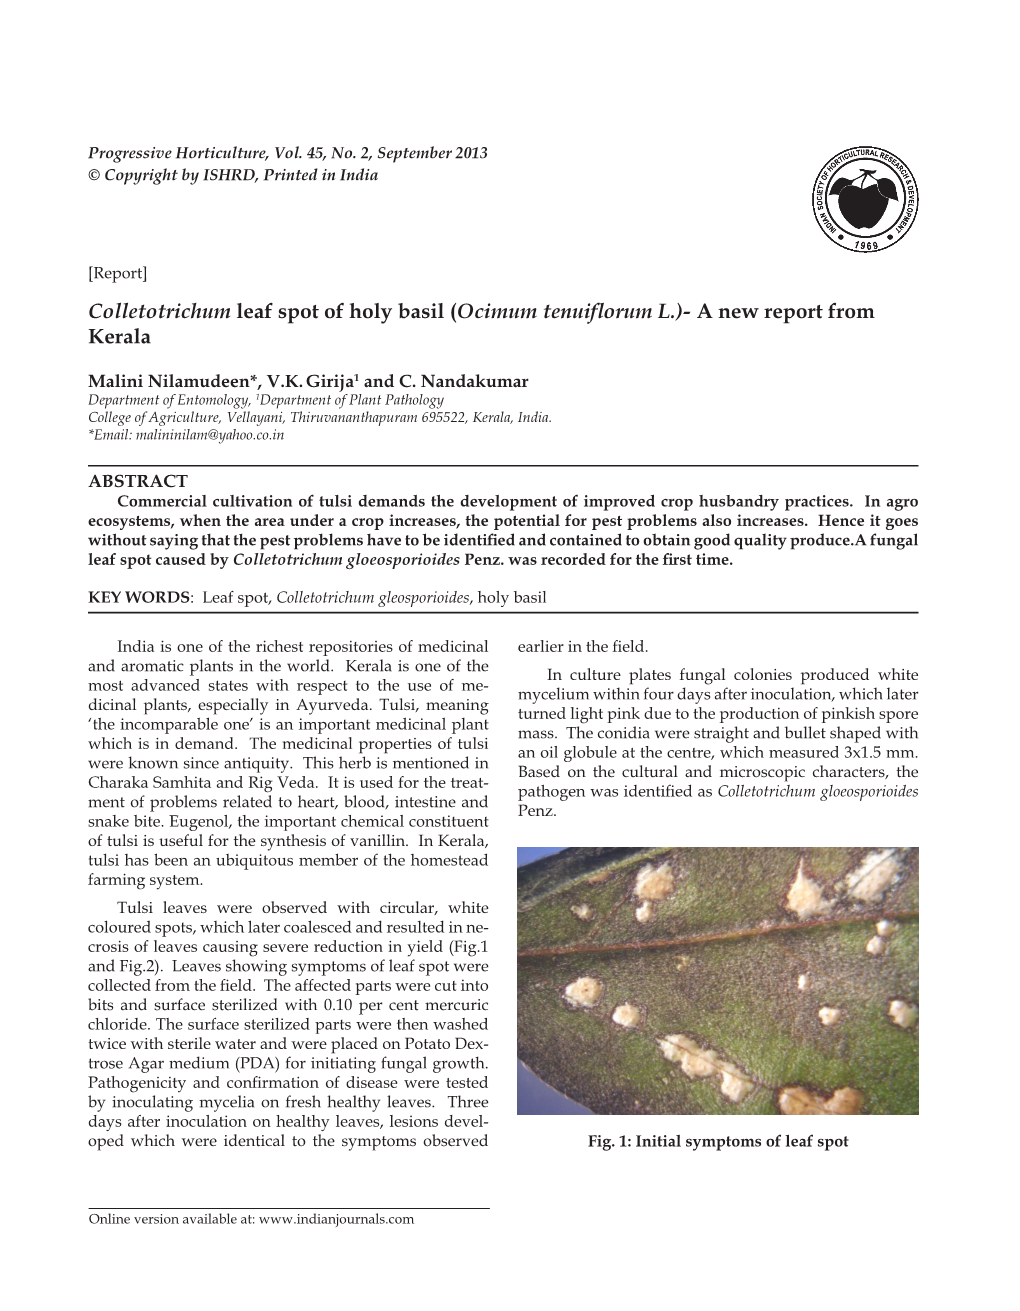 Colletotrichum Leaf Spot of Holy Basil (Ocimum Tenuiflorum L.)- a New Report from Kerala